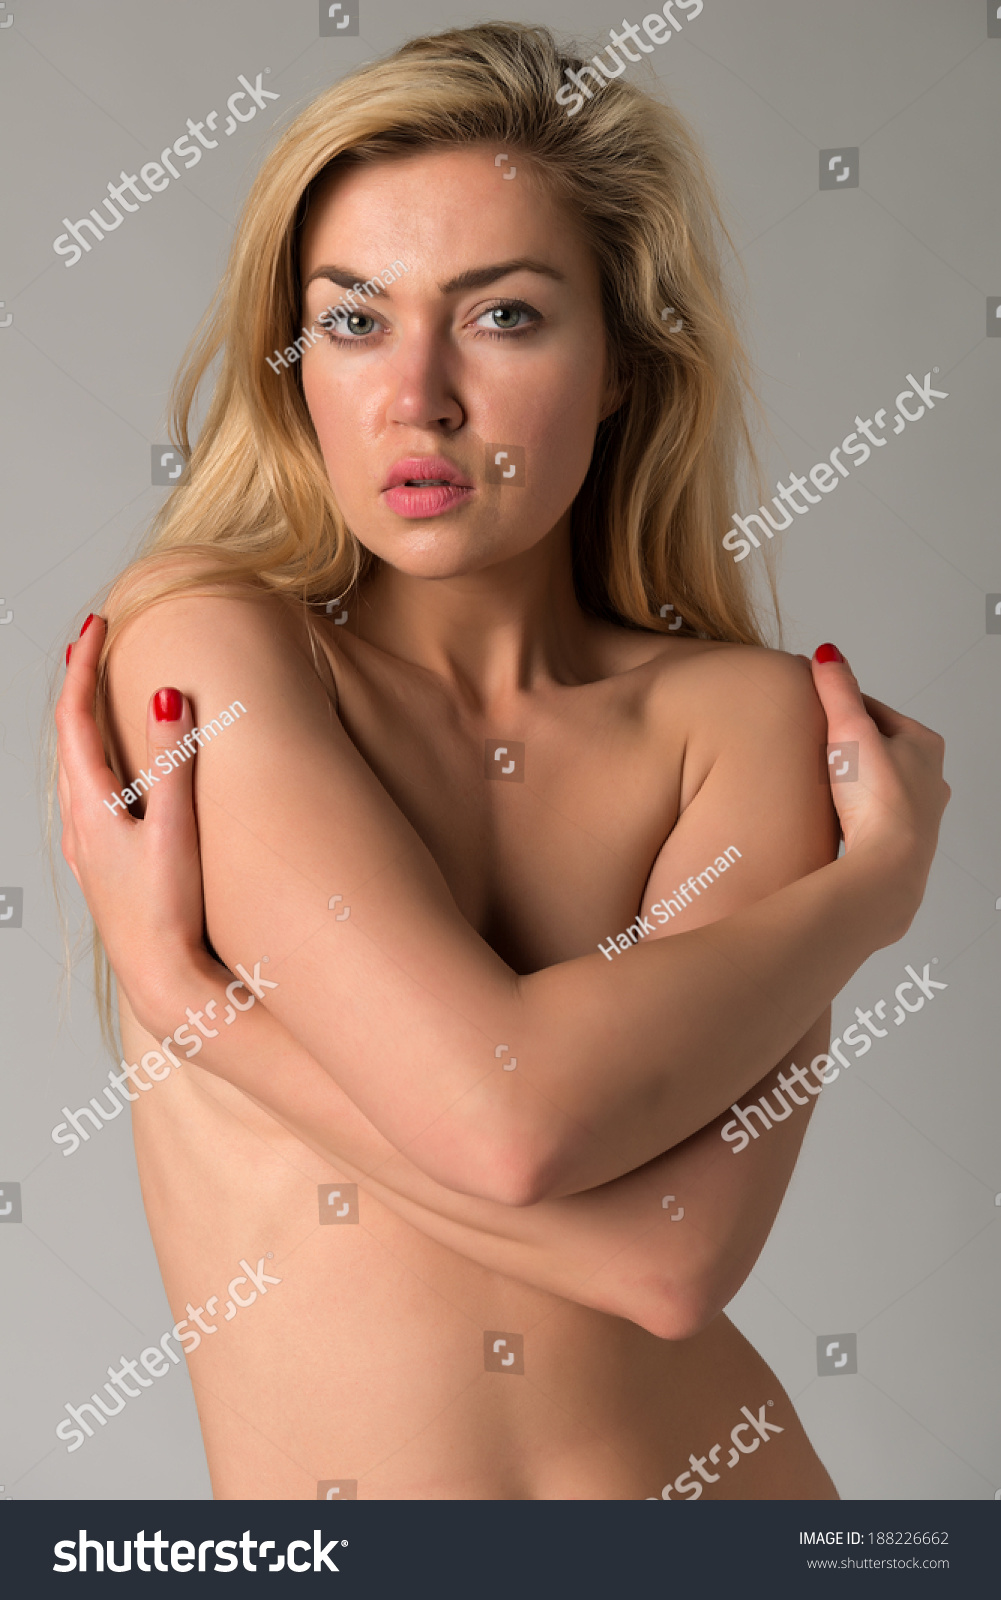 Beautiful Nude Blonde Russian Woman Stock Photo 188226662 Shutterstock